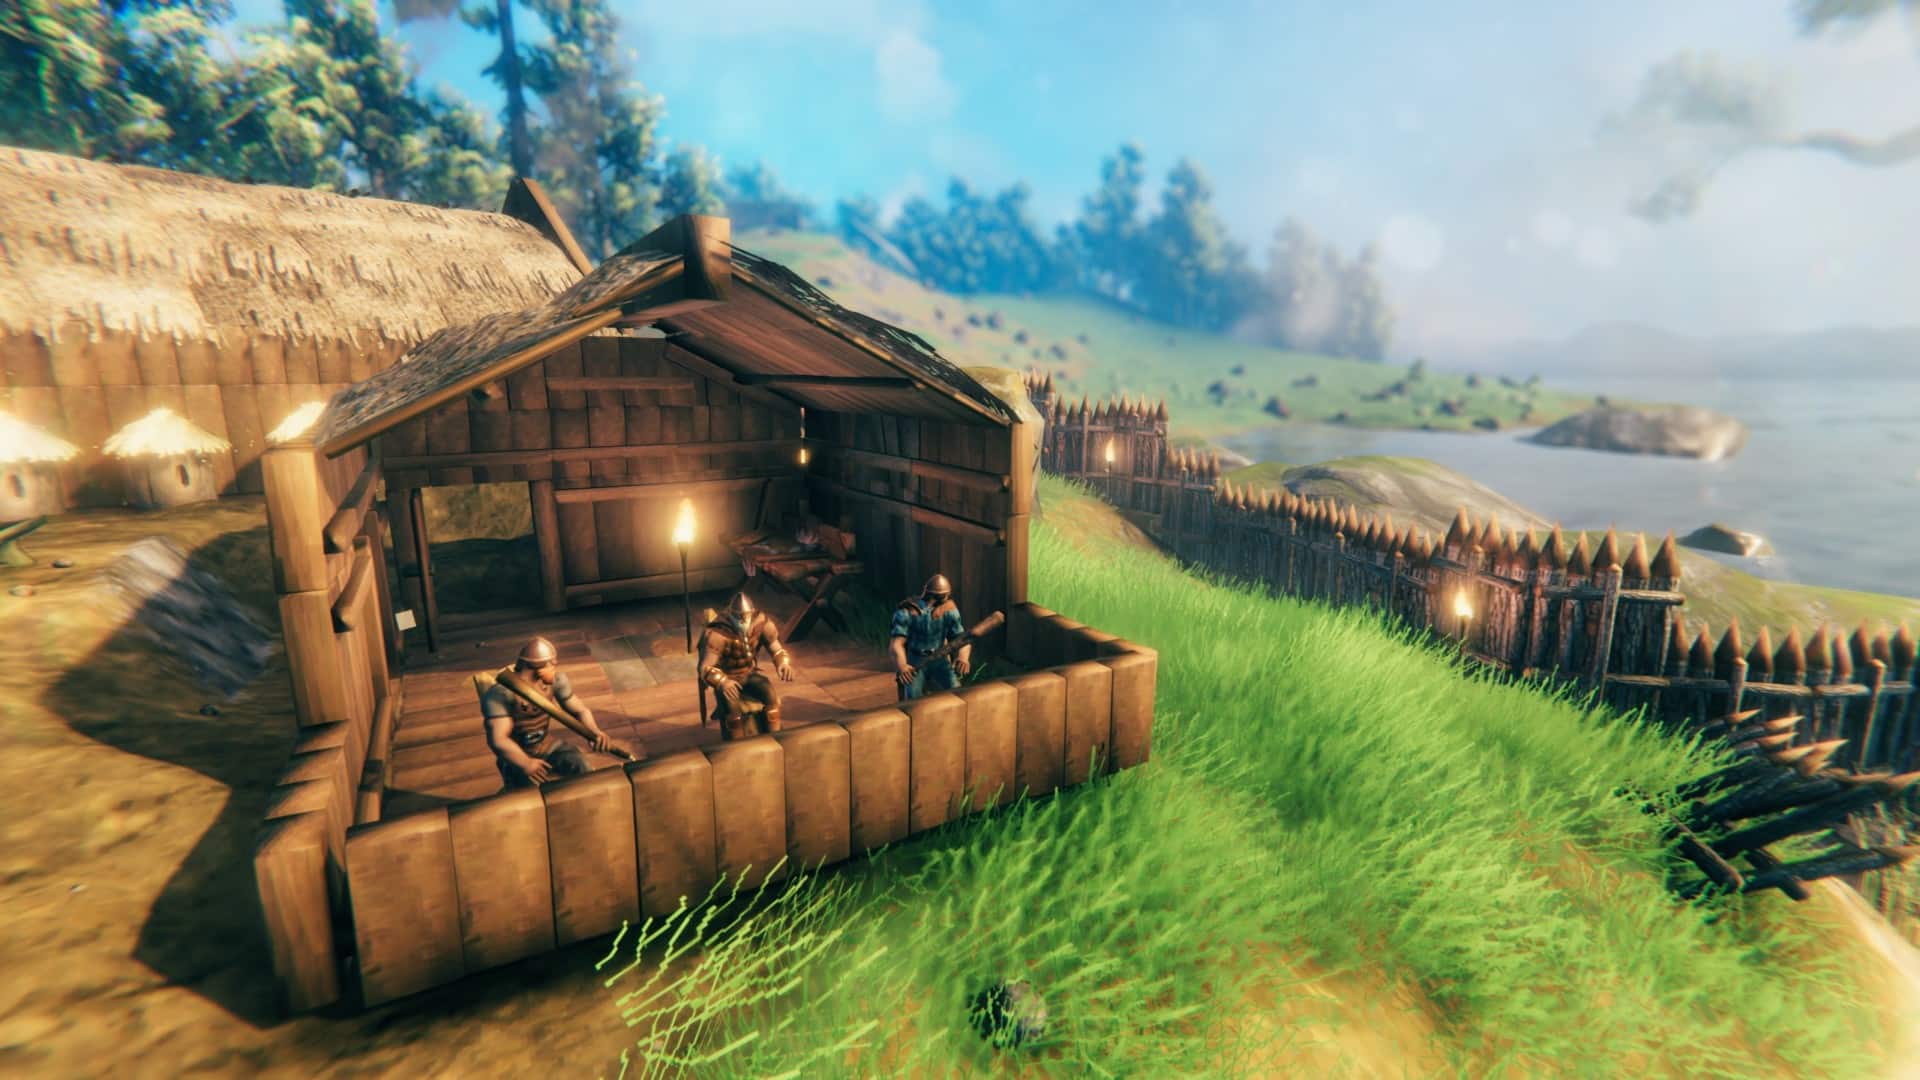 Iron Gate Studio Valheim survival game changes to account for massive popularity despite Minecraft, Rust